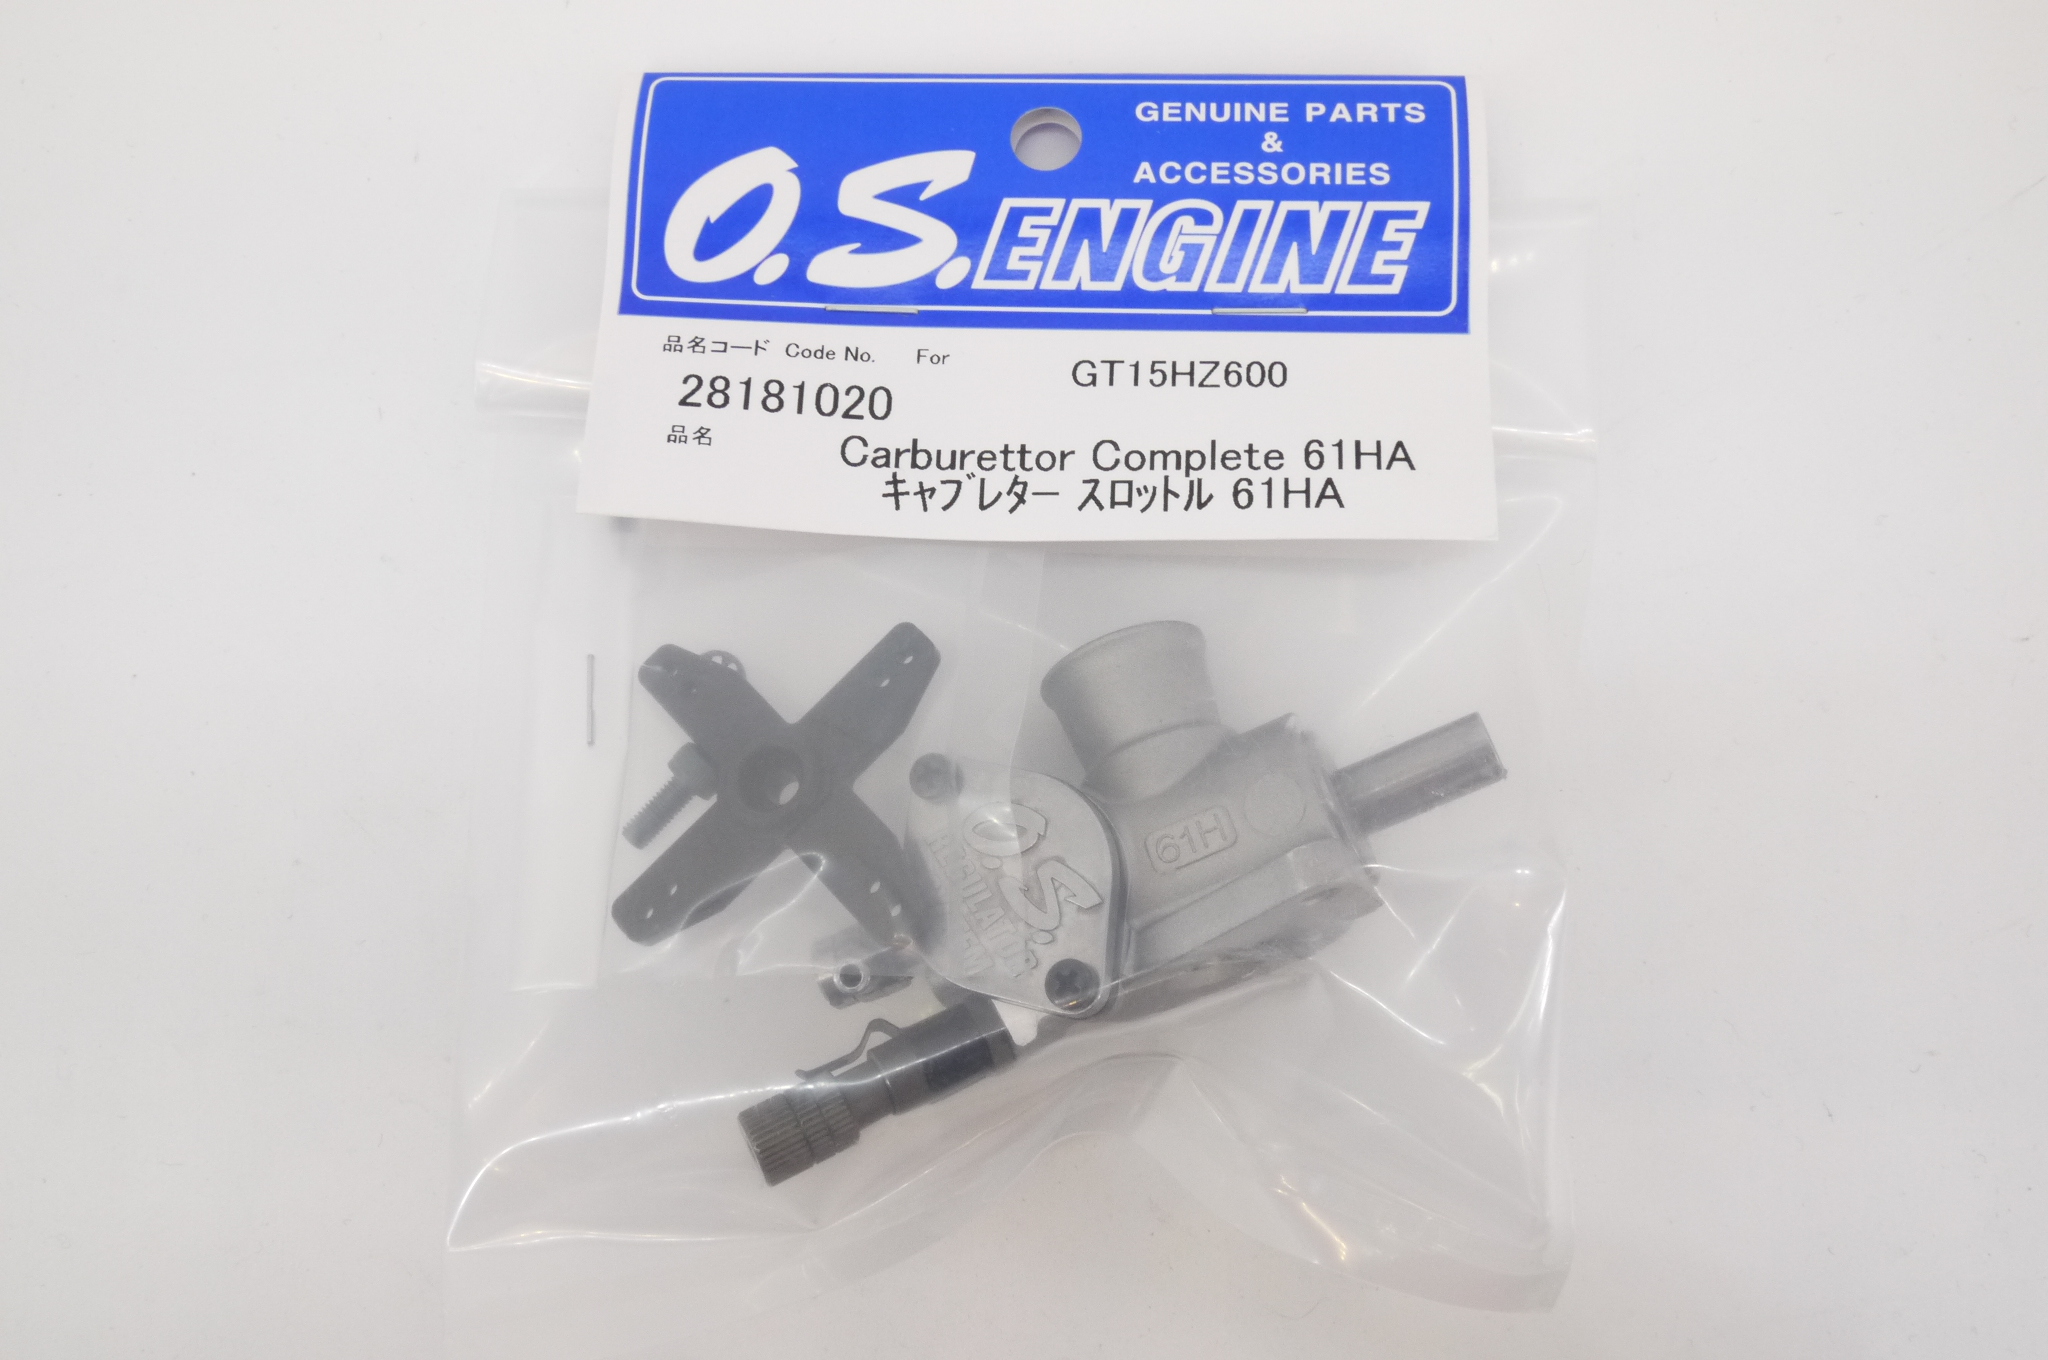 40D 40/46LA OS Engine Carburettor Assembly - X-OS24081000 